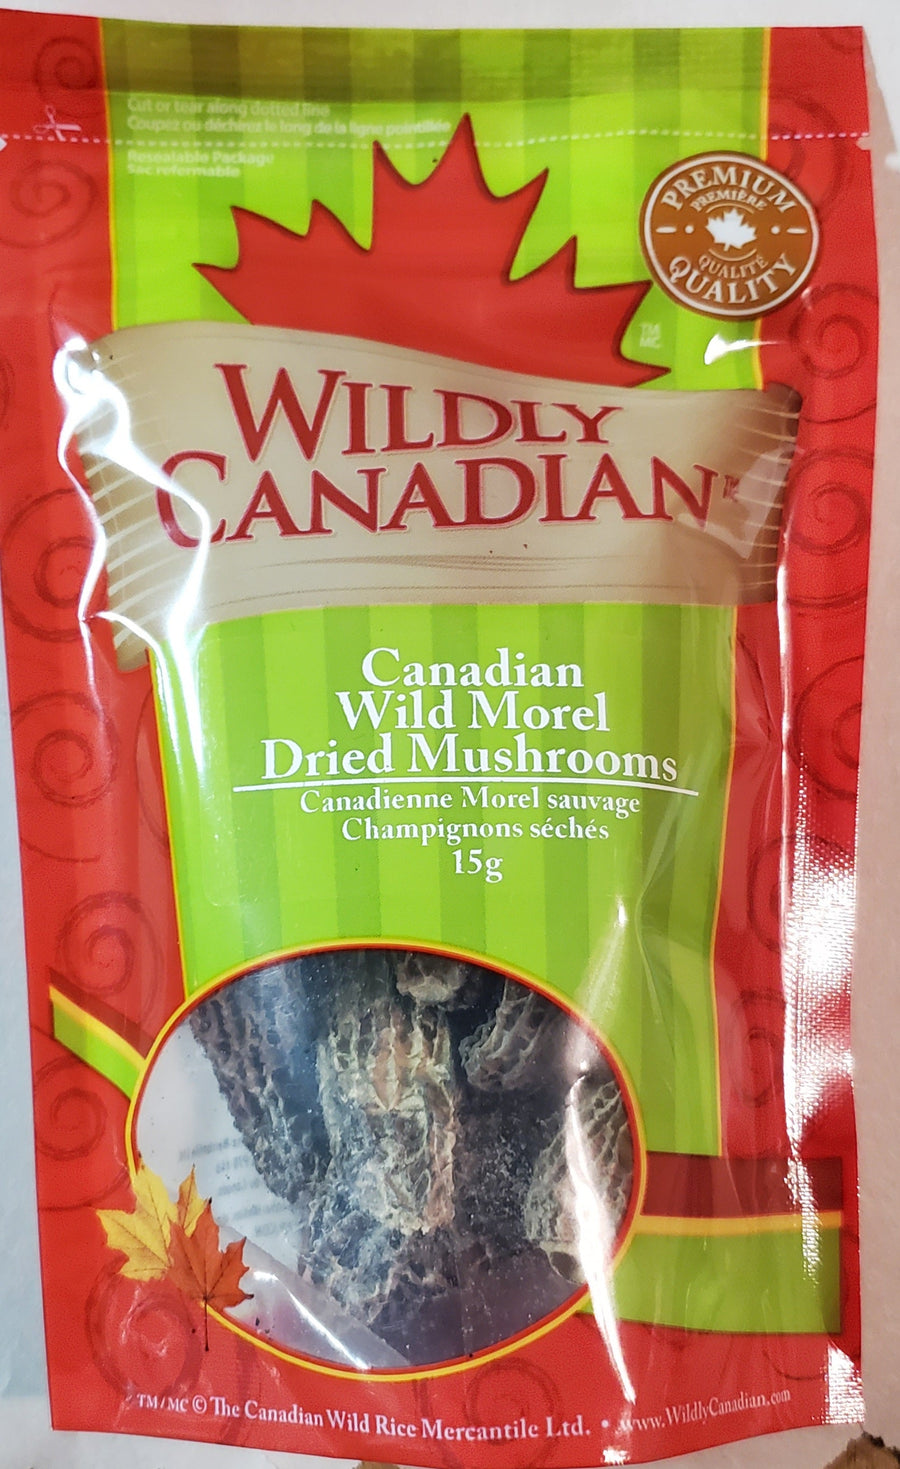 Canadian Wild Morel Dried Mushrooms